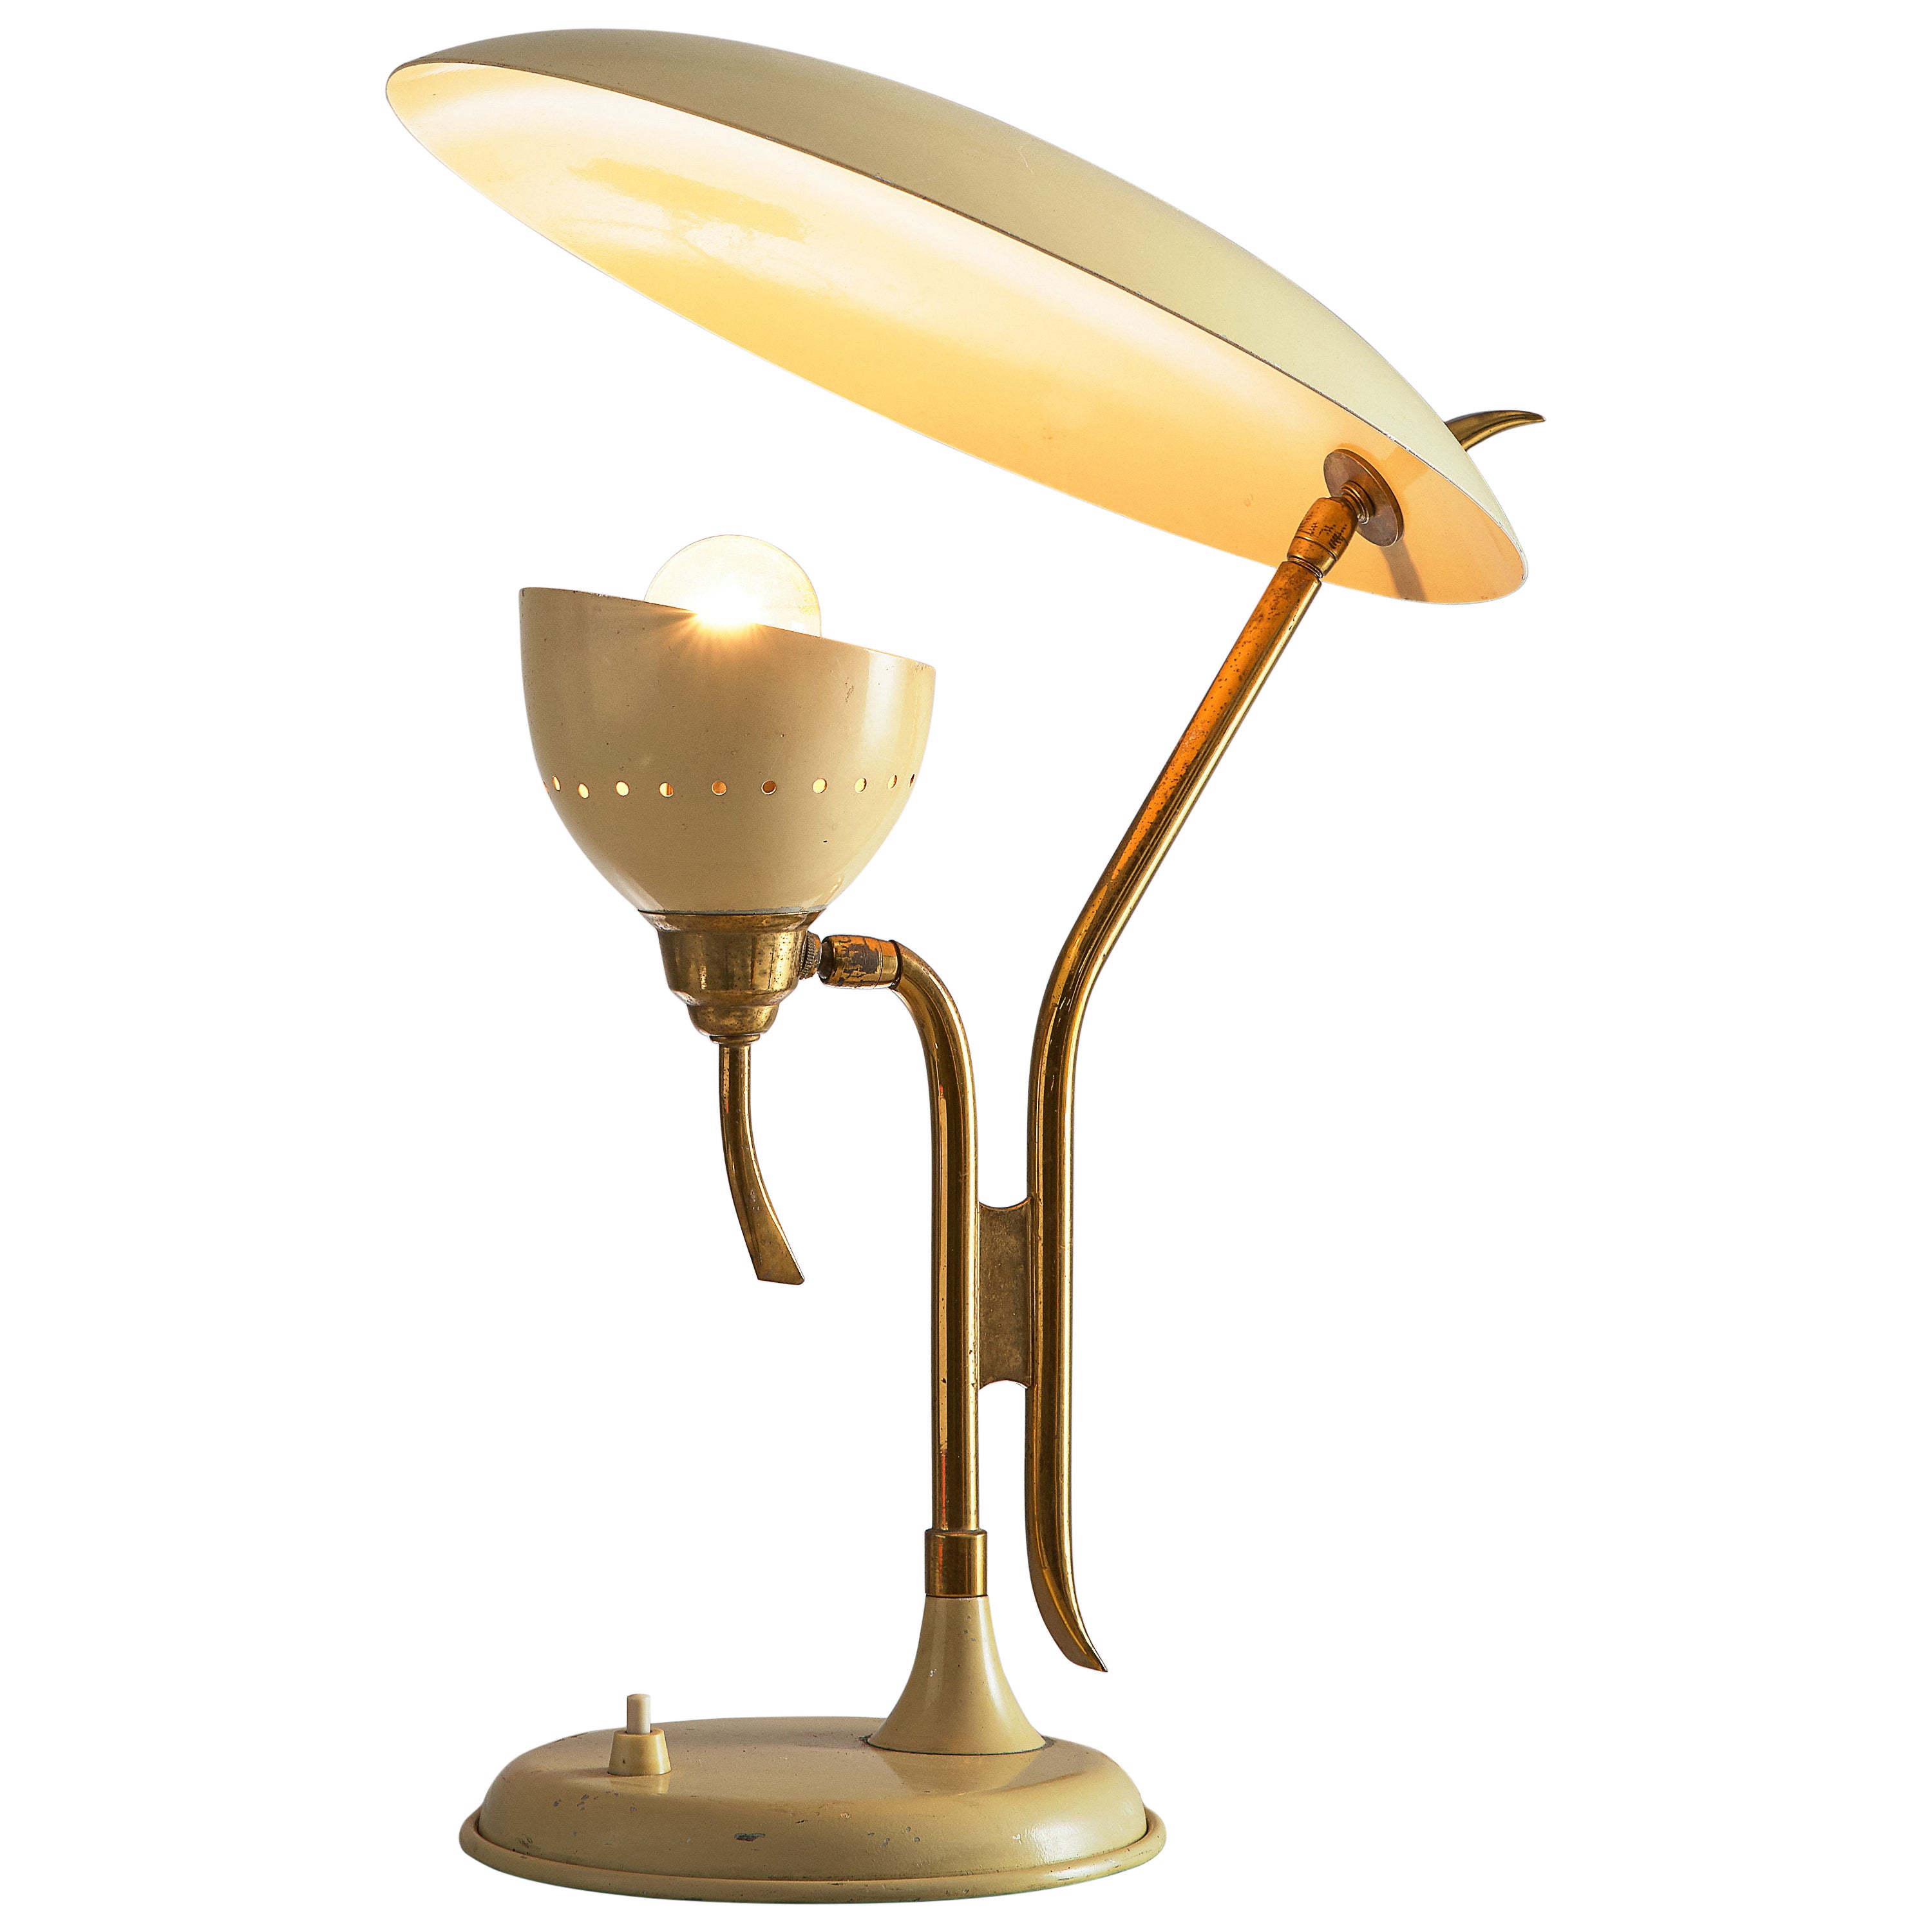 Lumen Milano Table Lamp in Beige Metal and Brass